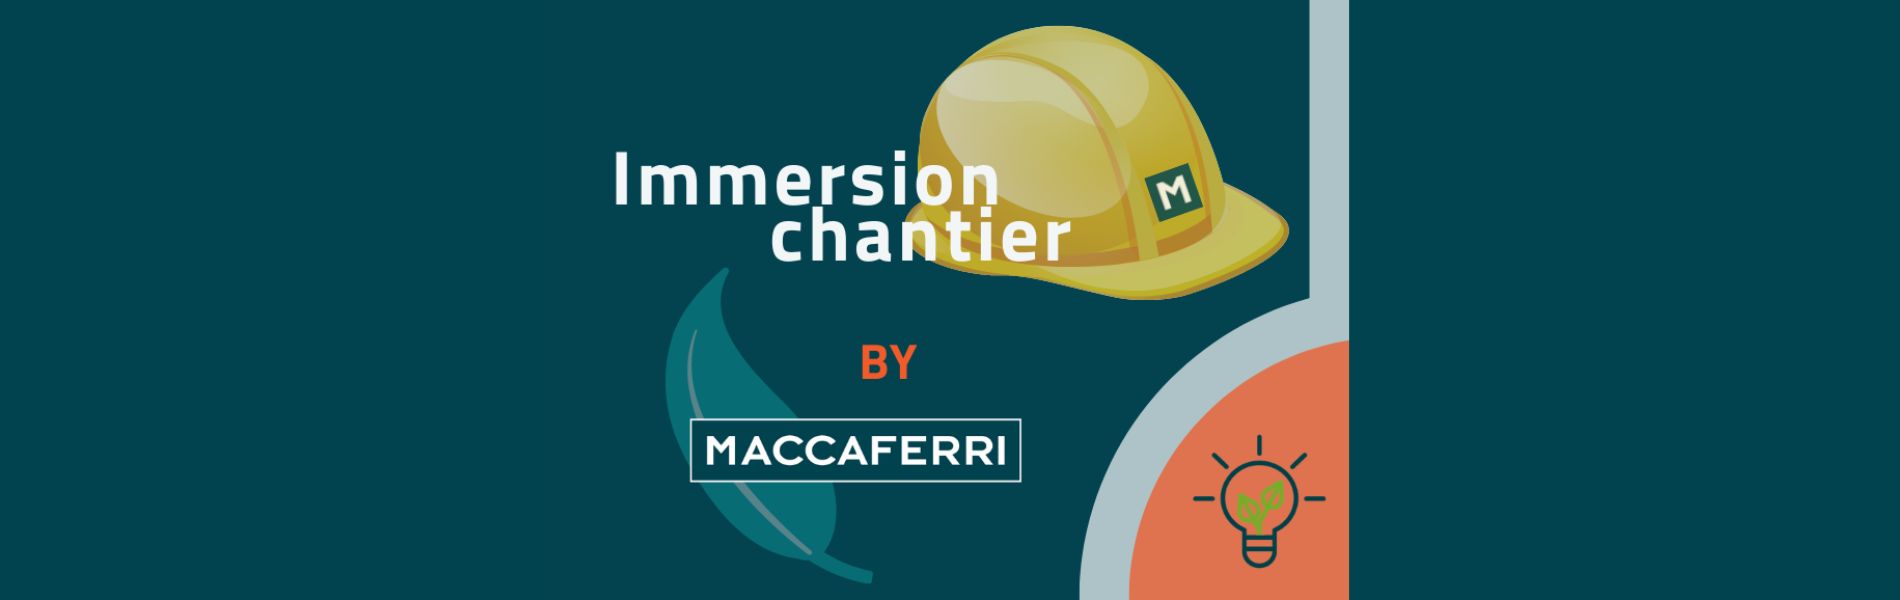 Maccaferri présente son Podcast “Immersion chantier”